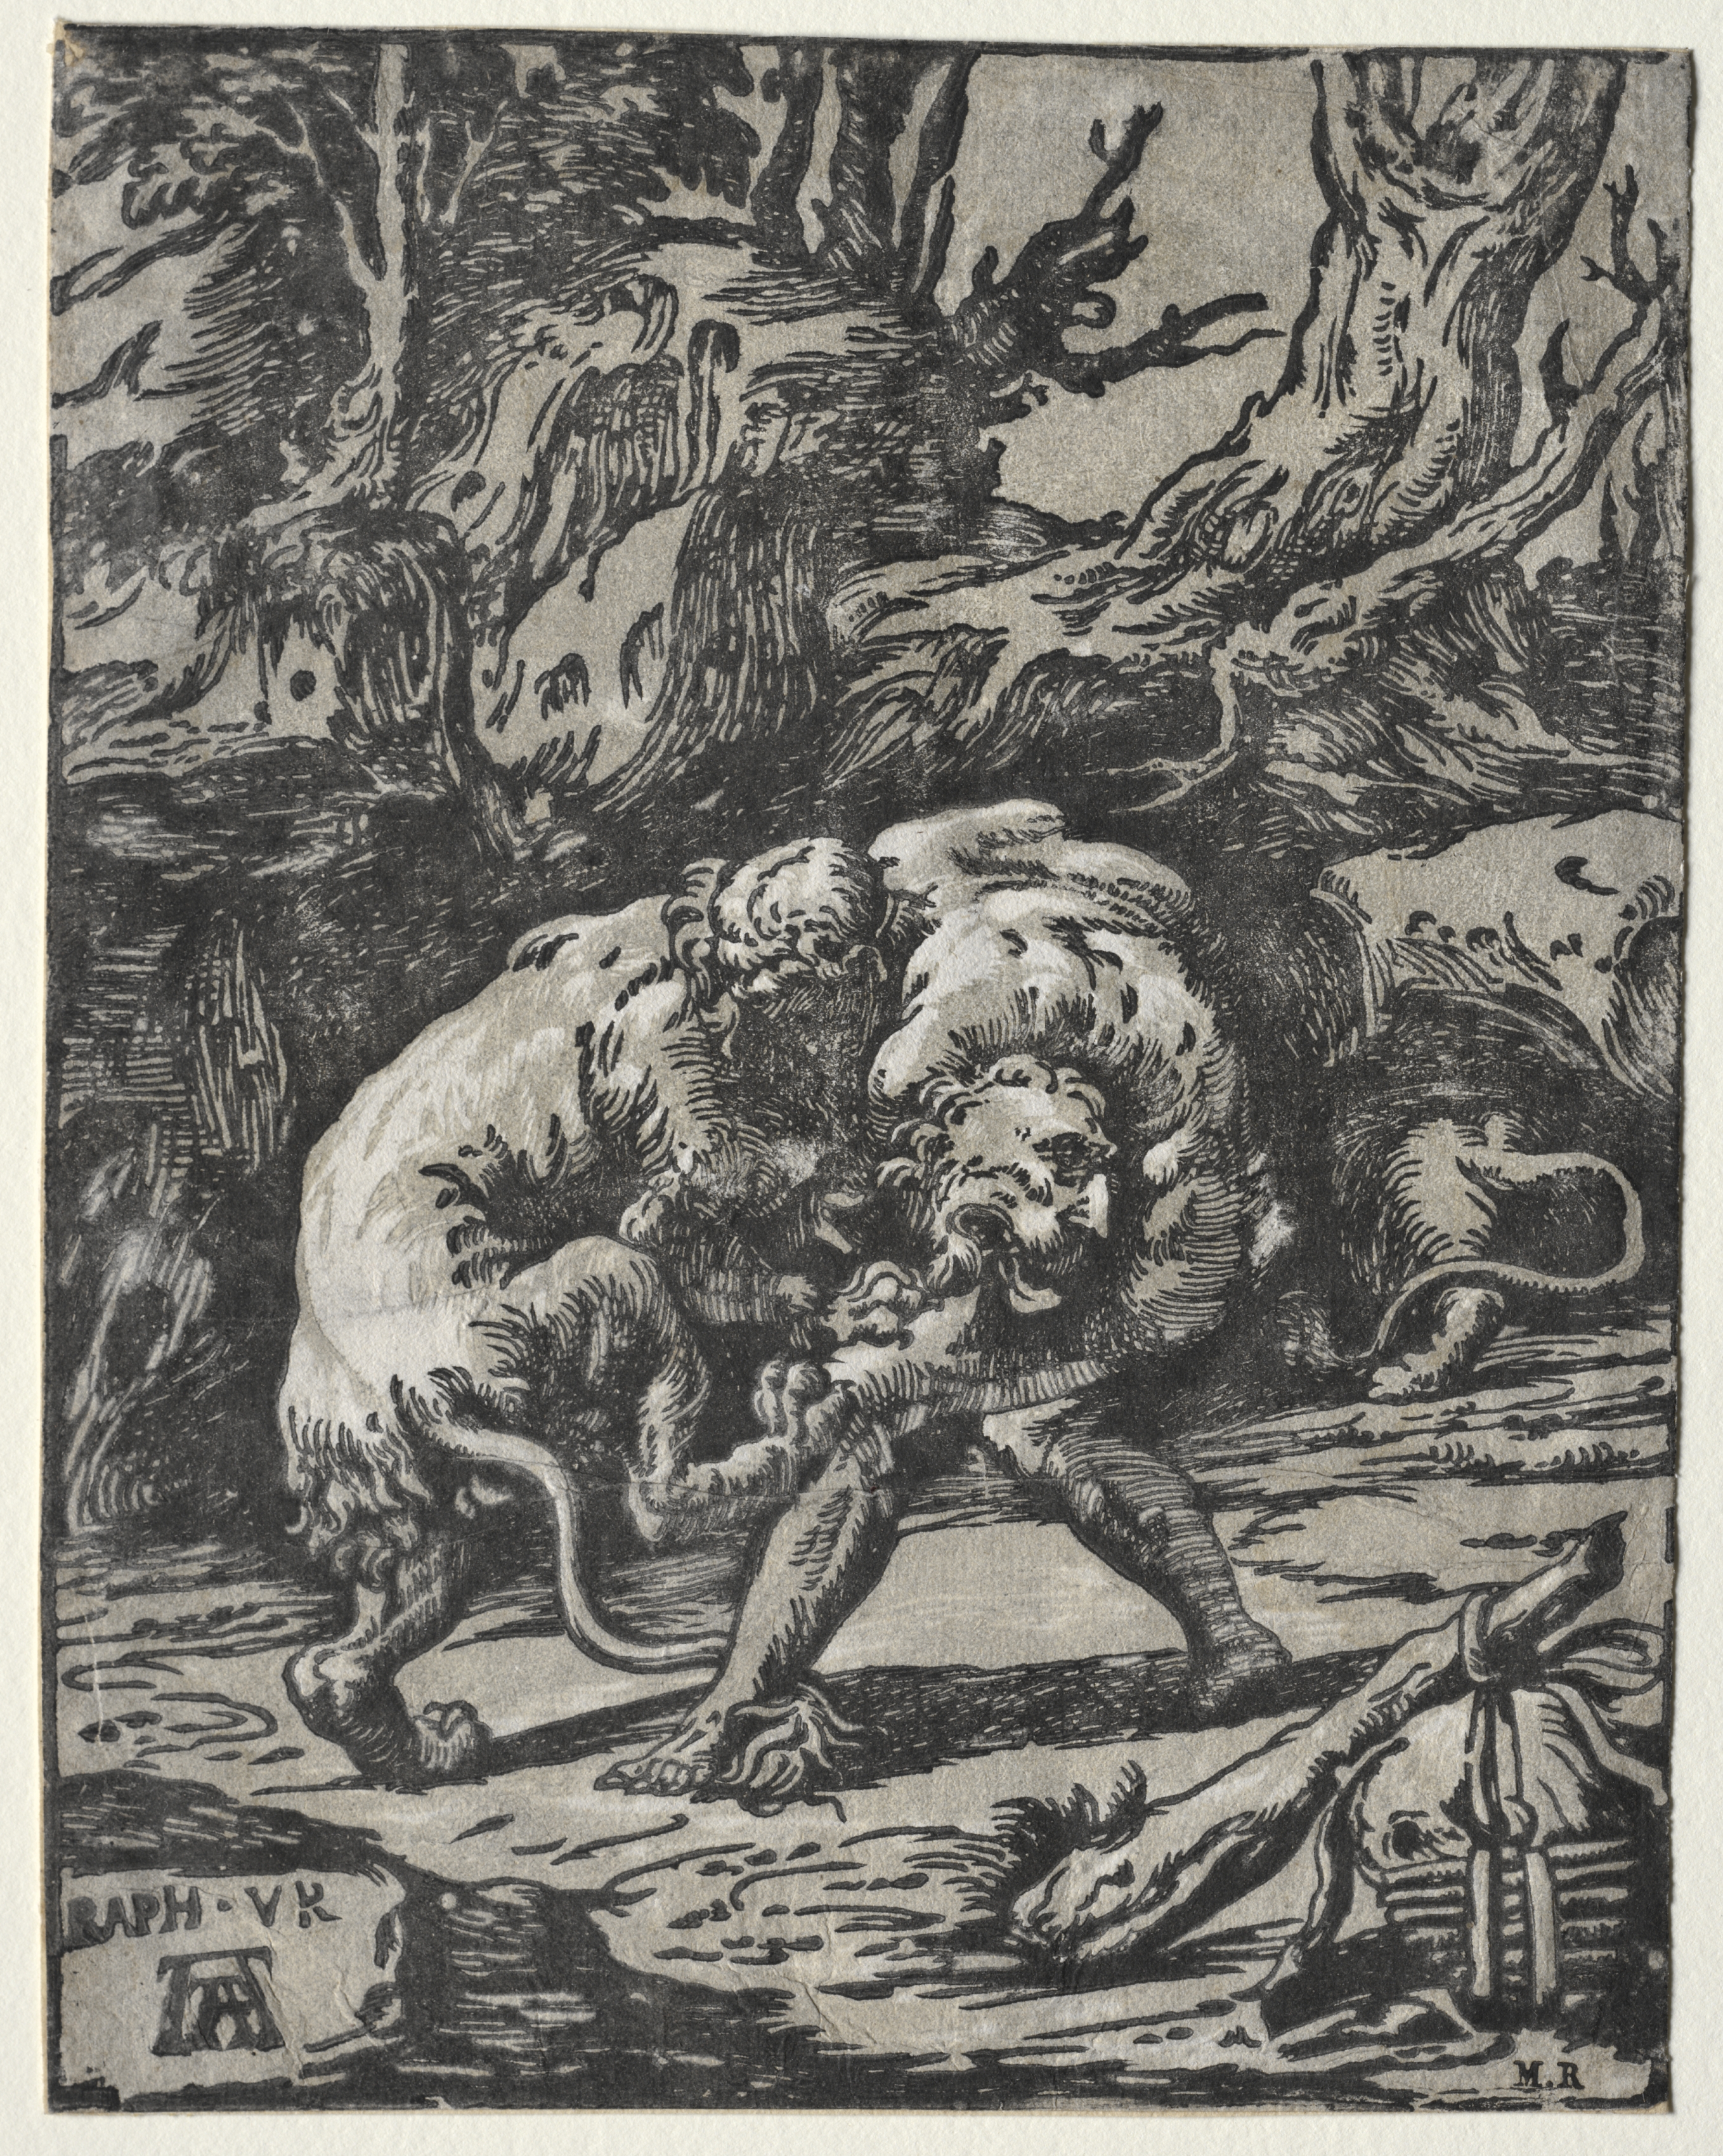 Hercules Strangling the Lion of Nimes